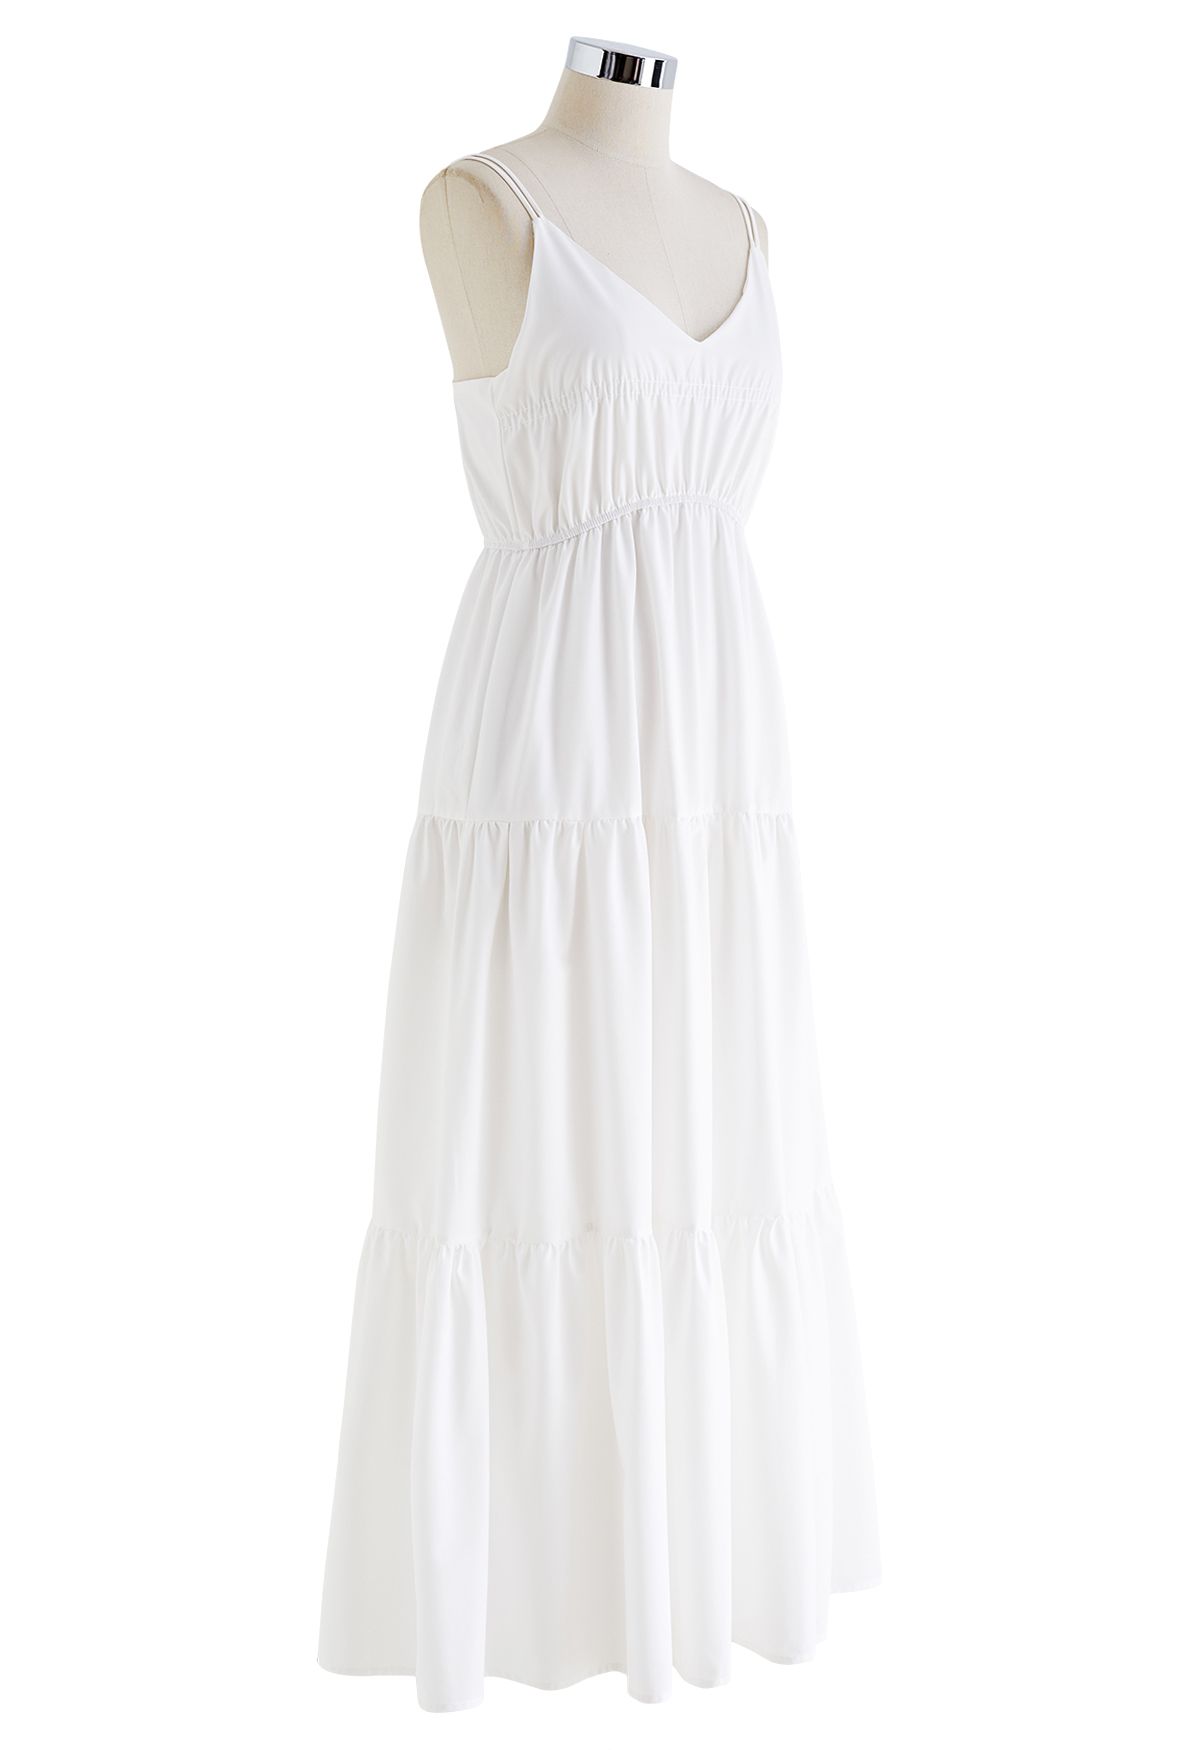 Double Straps Tie-Back Cami Dress in White - Retro, Indie and Unique ...